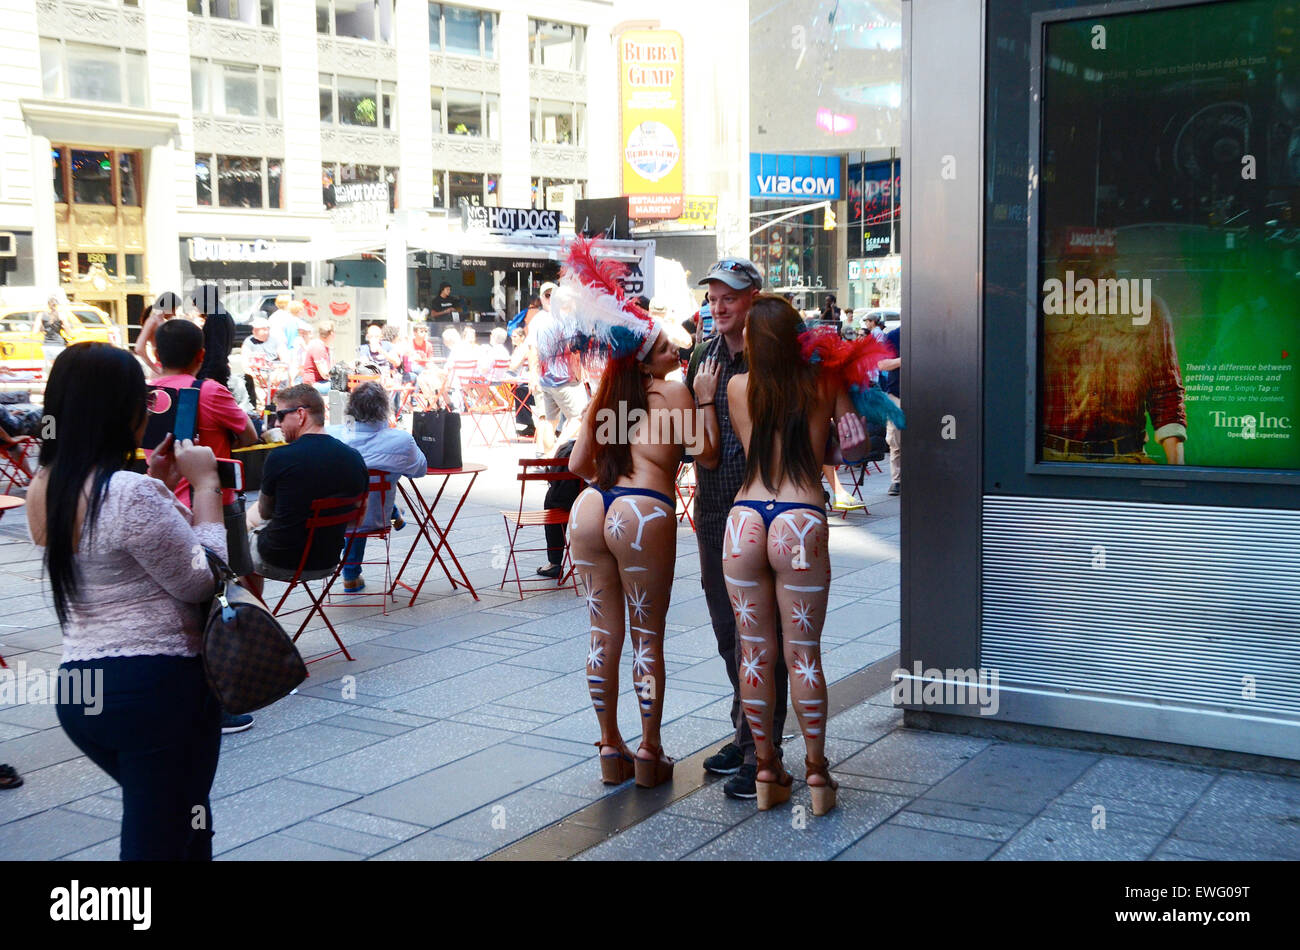 stars and stripes body paint women times square new york usa tourists photo Stock Photo